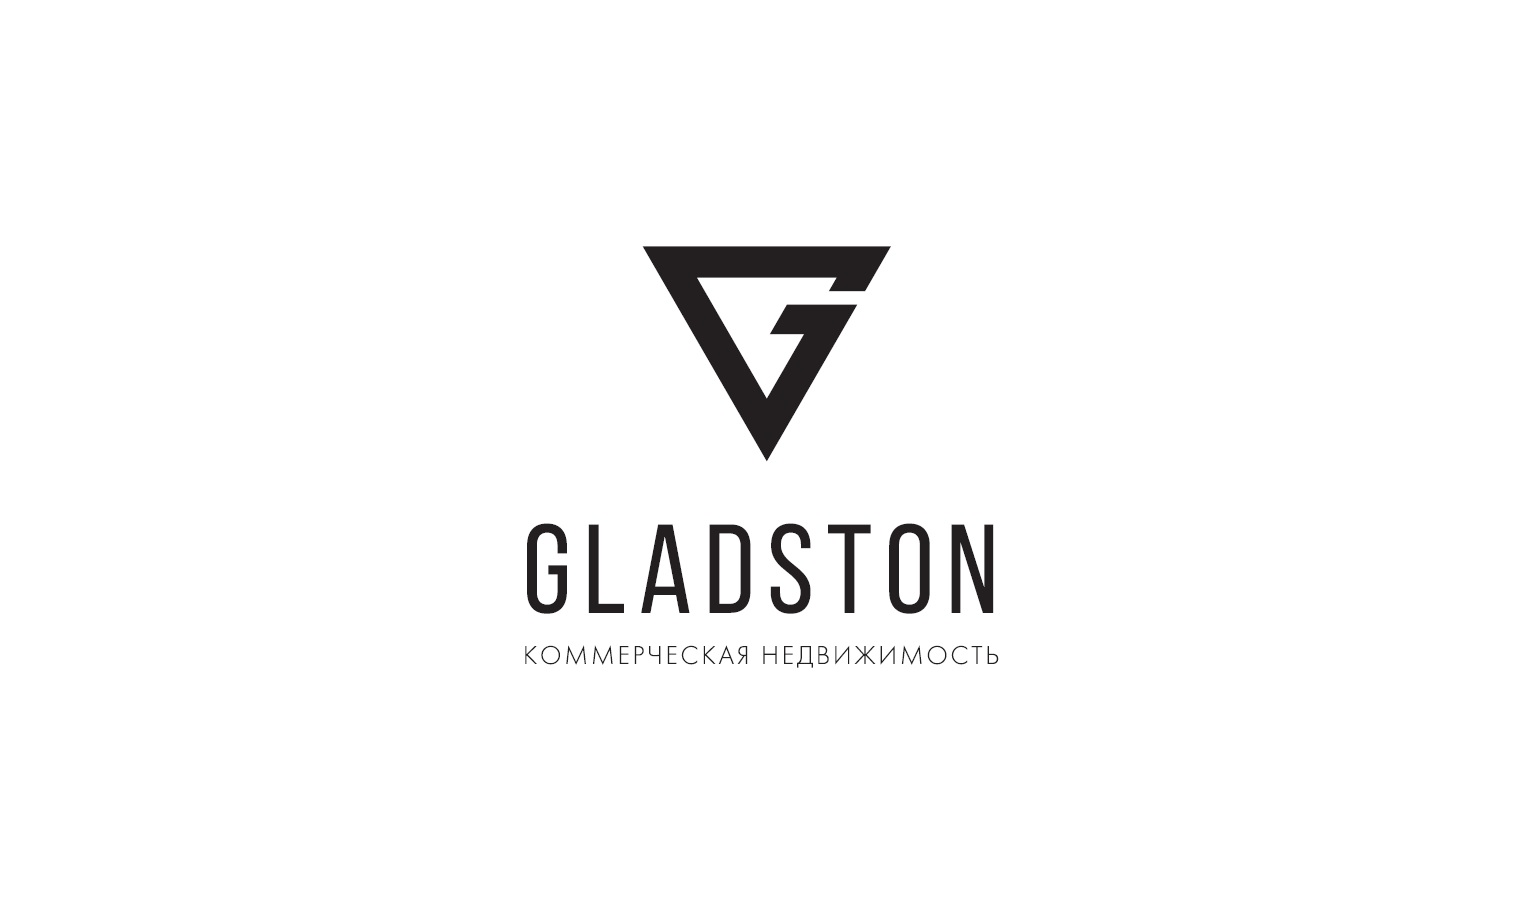 GLADSTON